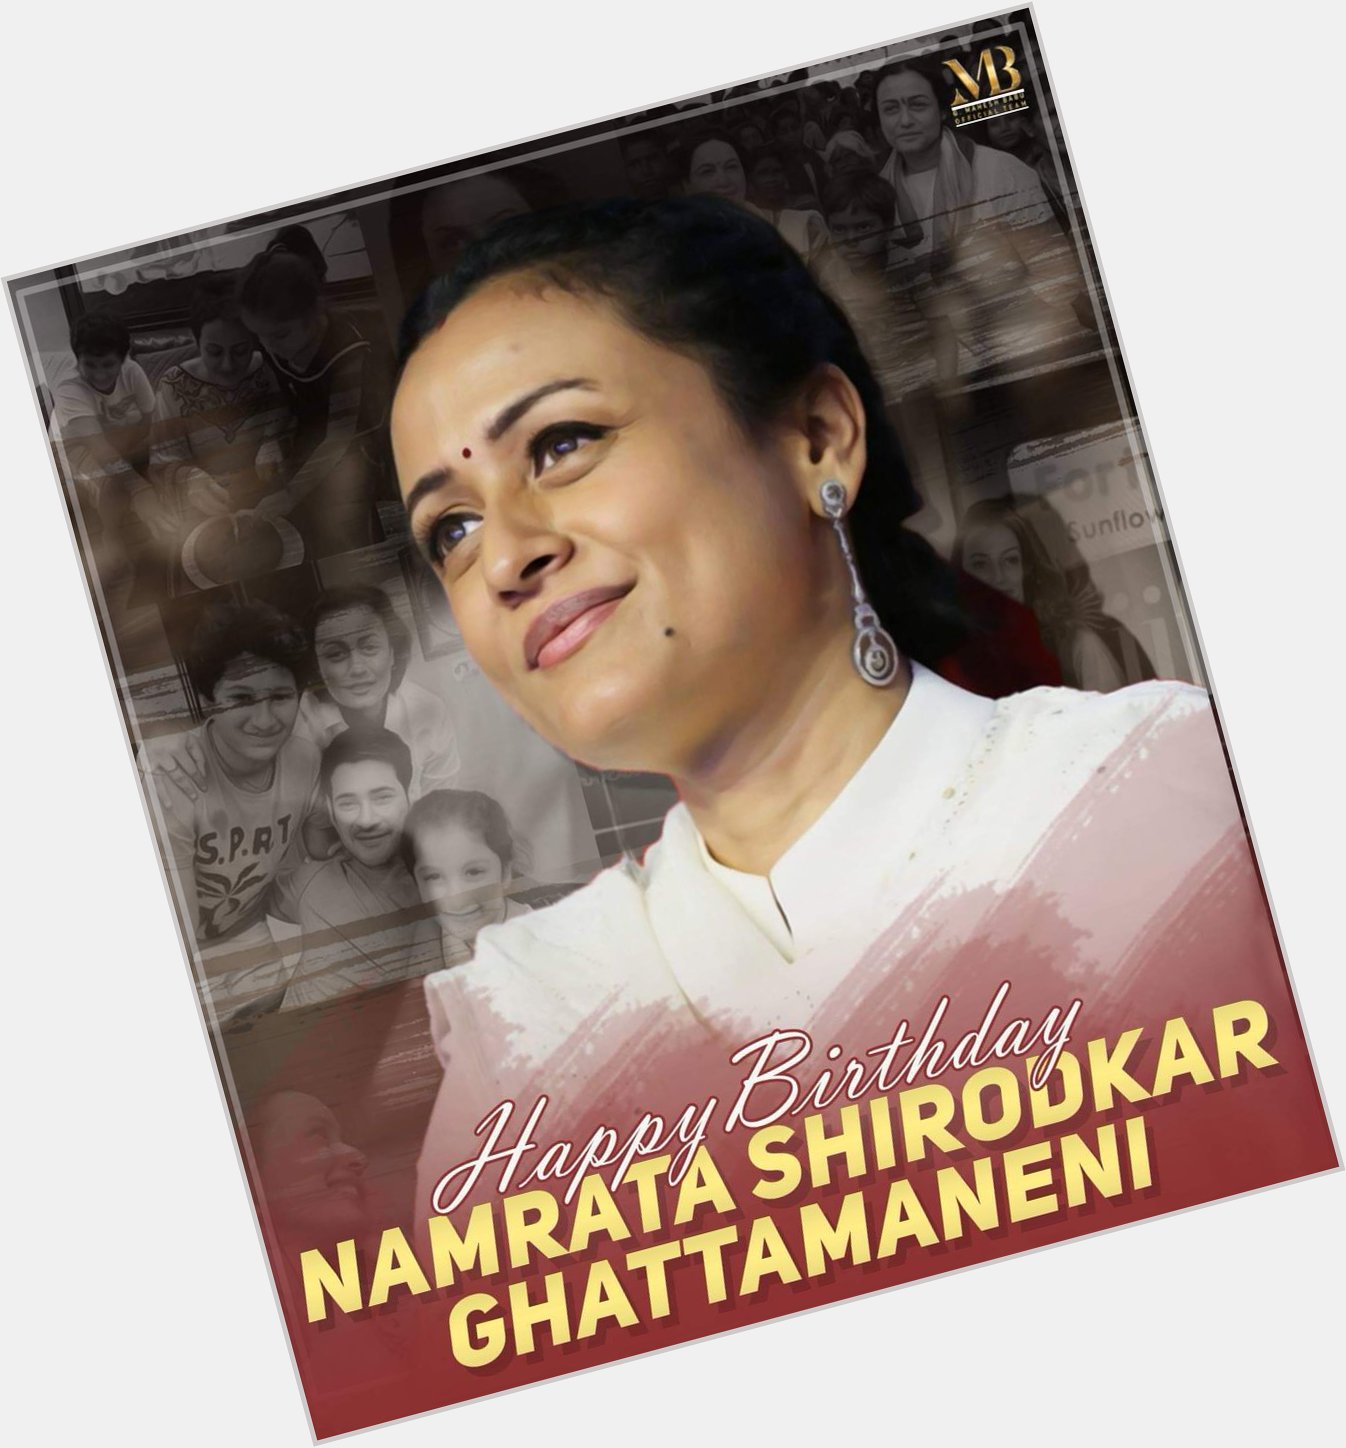 Wishing you Namrata Shirodkar Ghattamaneni garu a very Happy Birthday. 